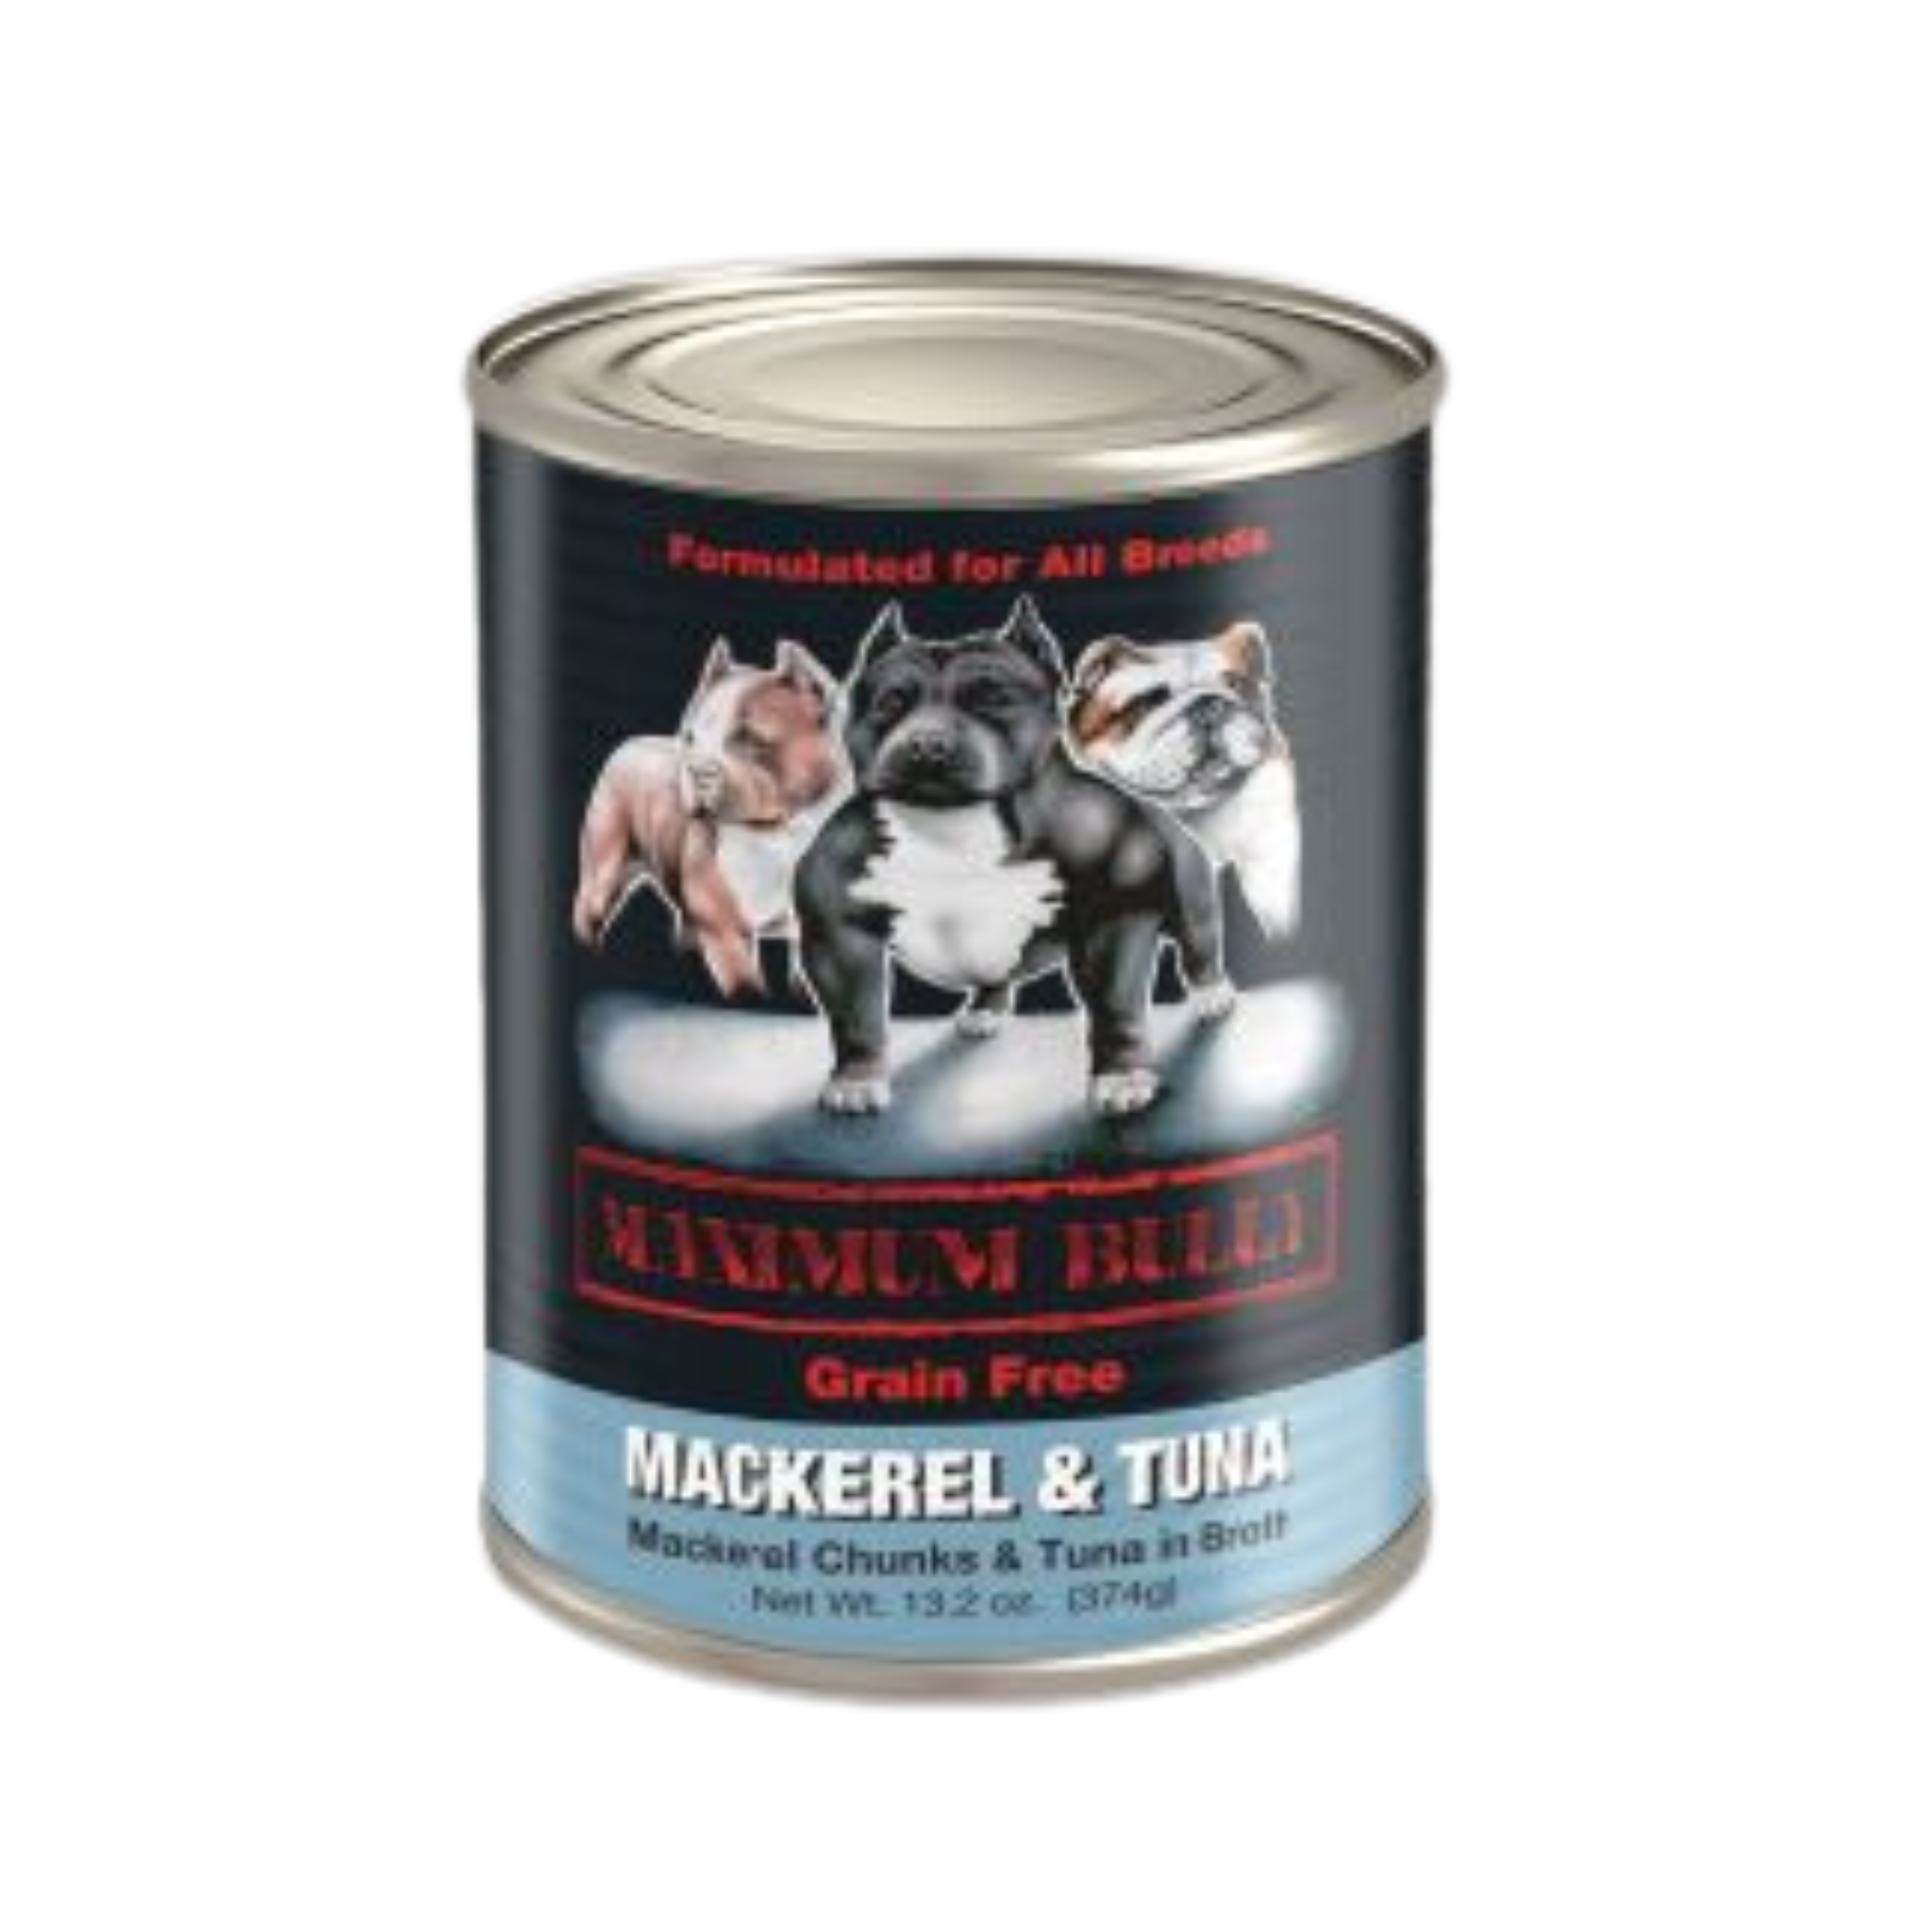 Maximum Bully Grain Free Mackerel & Tuna in Broth Dog Canned